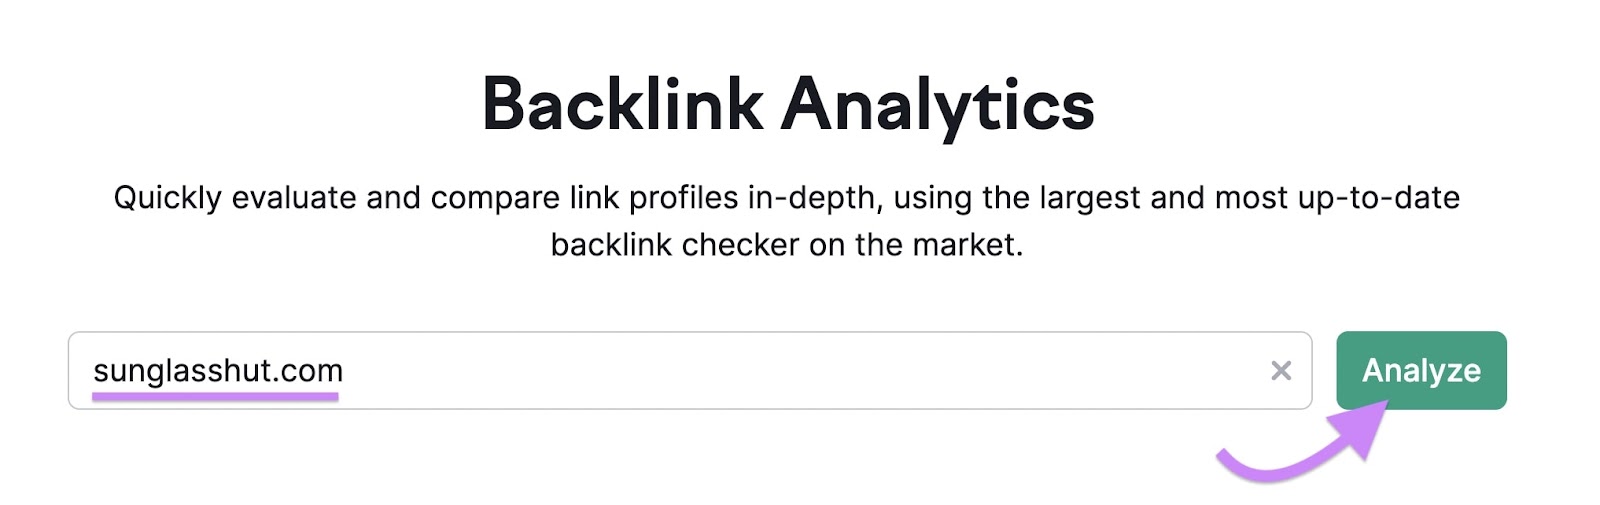 "sunglasshut.com" entered into the Backlink Analytics tool